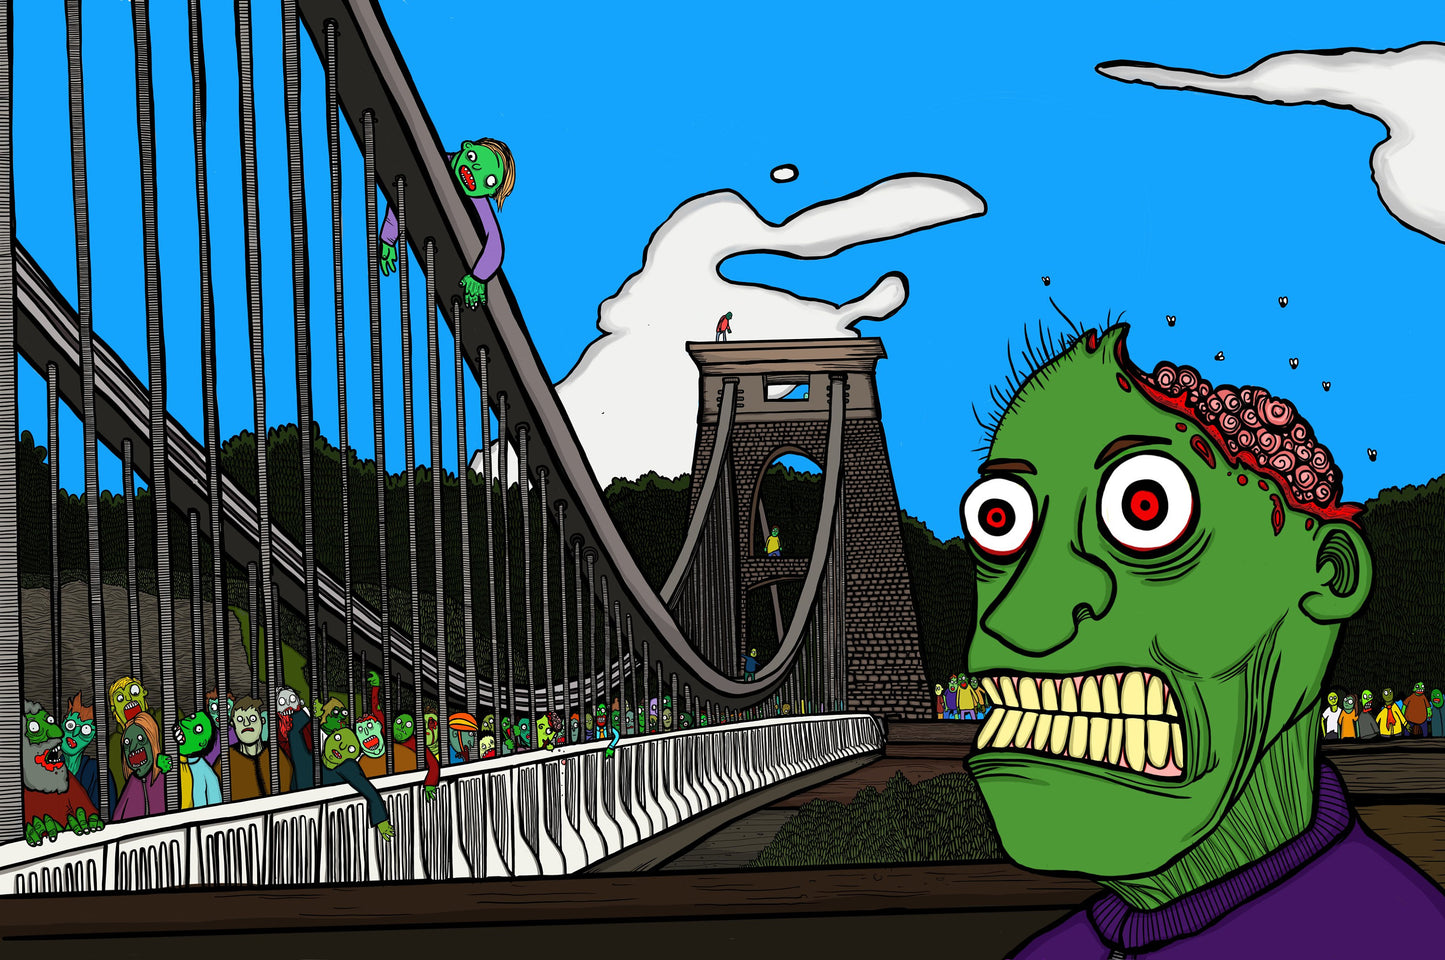 Zombies vs Clifton Suspension Bridge Print